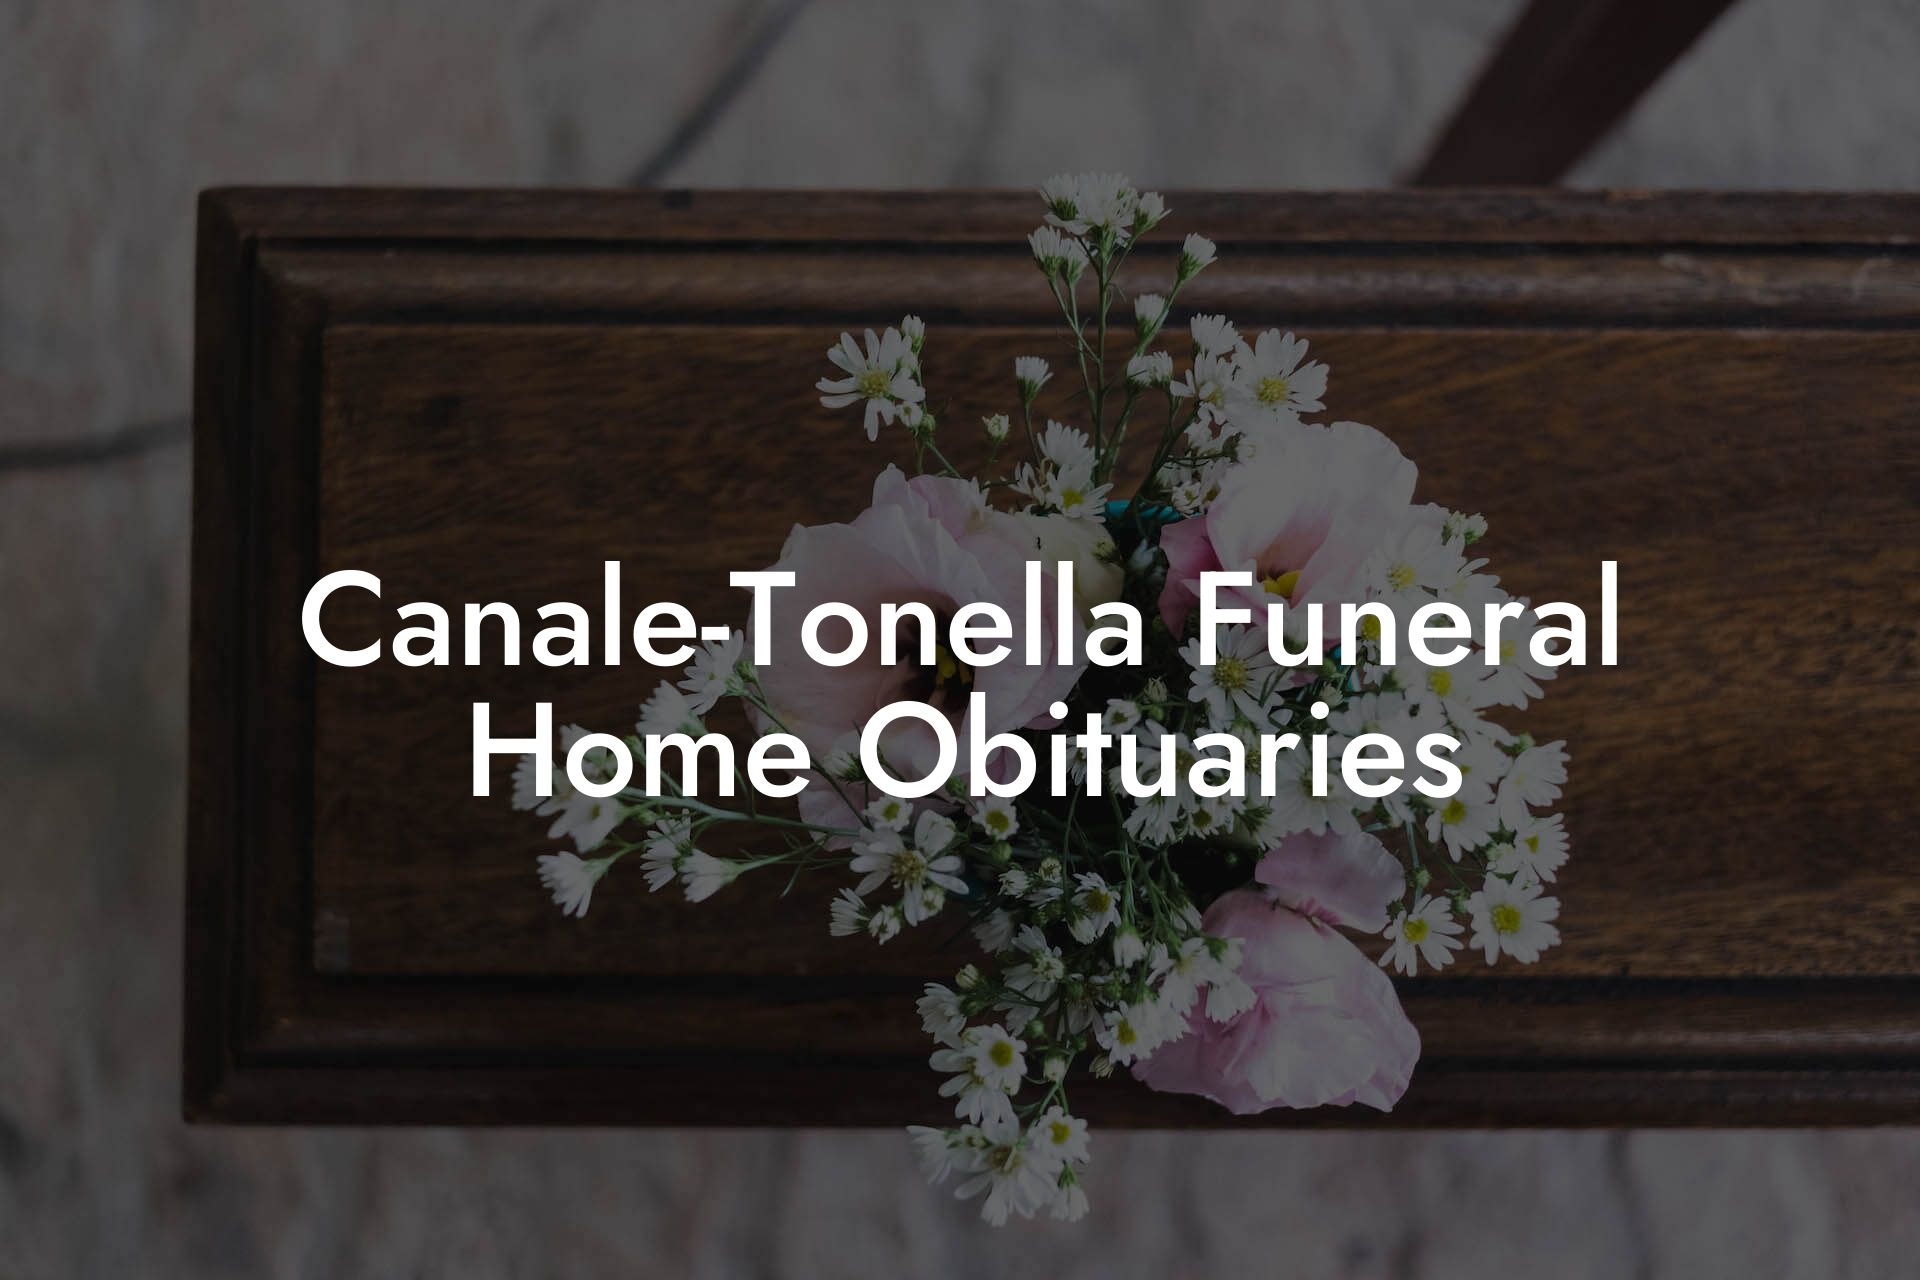 Canale-Tonella Funeral Home Obituaries